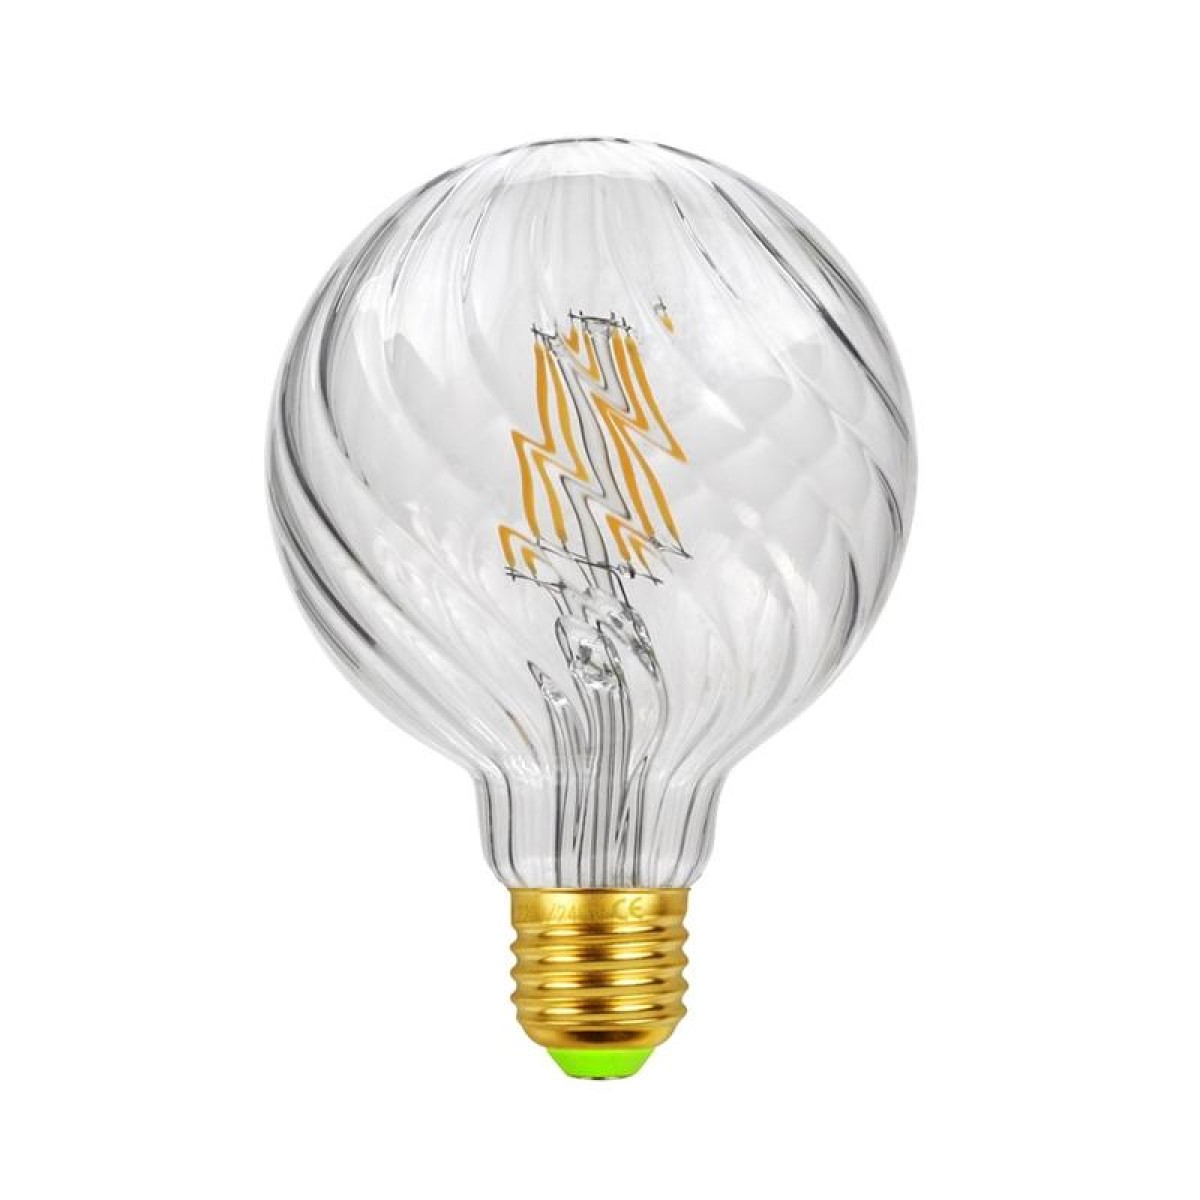 E27 Screw Port LED Vintage Light Shaped Decorative Illumination Bulb, Style: G95 Oblique Transparent(110V 4W 2700K)